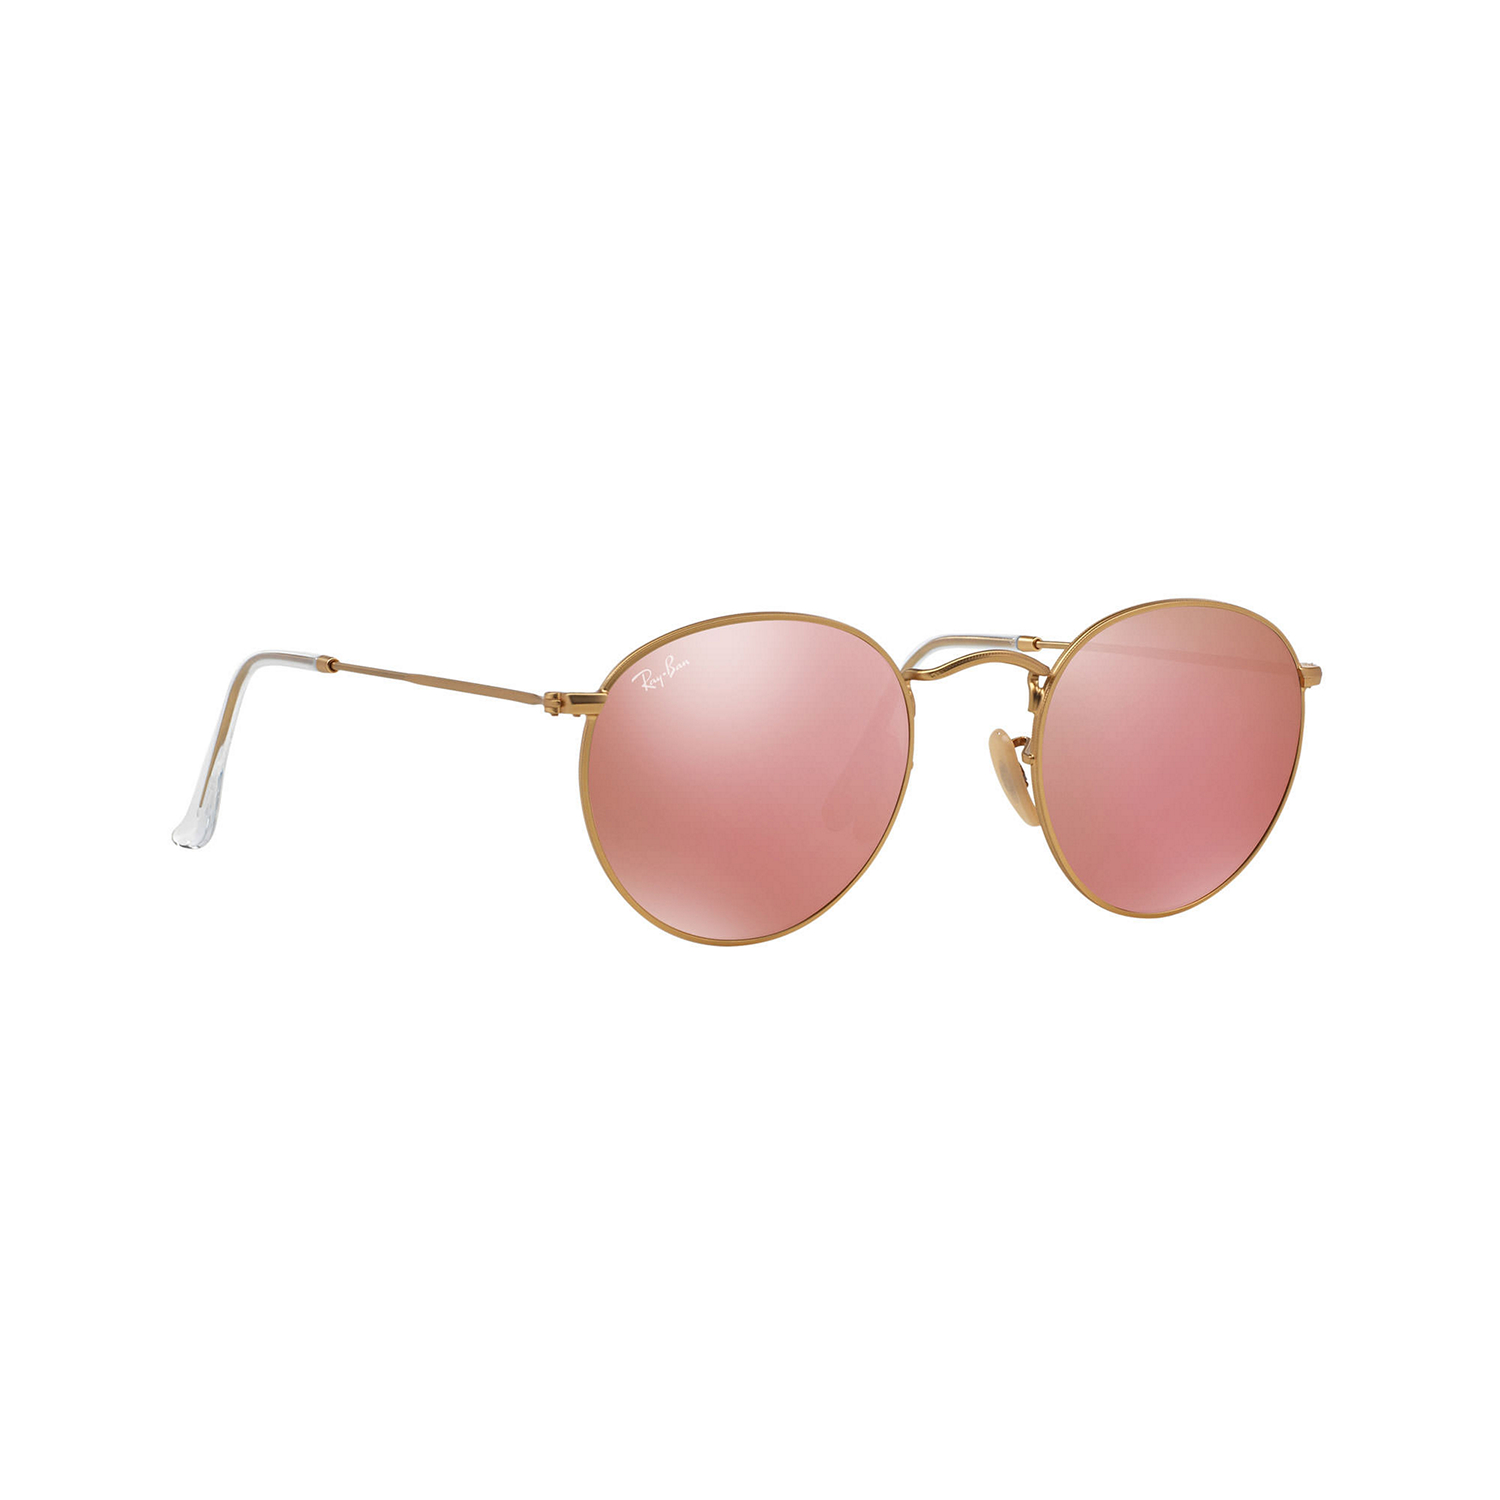 Round Phantos Sunglasses